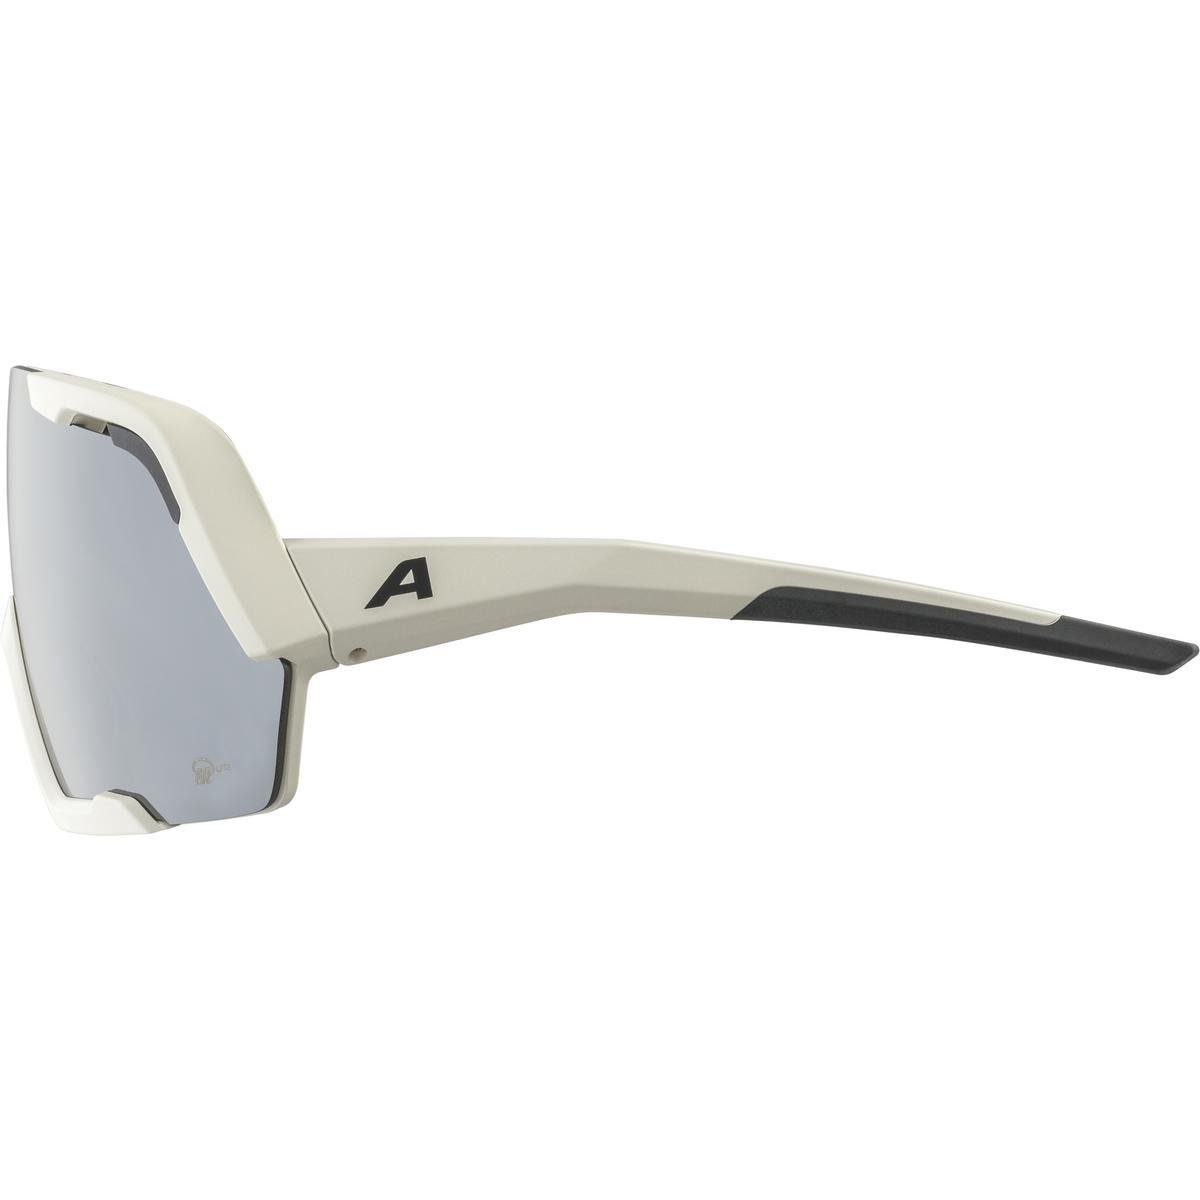 Alpina Q-LITE ROCKET Sportbrille BOLD grau Alpina A8682 Sonnenbrille